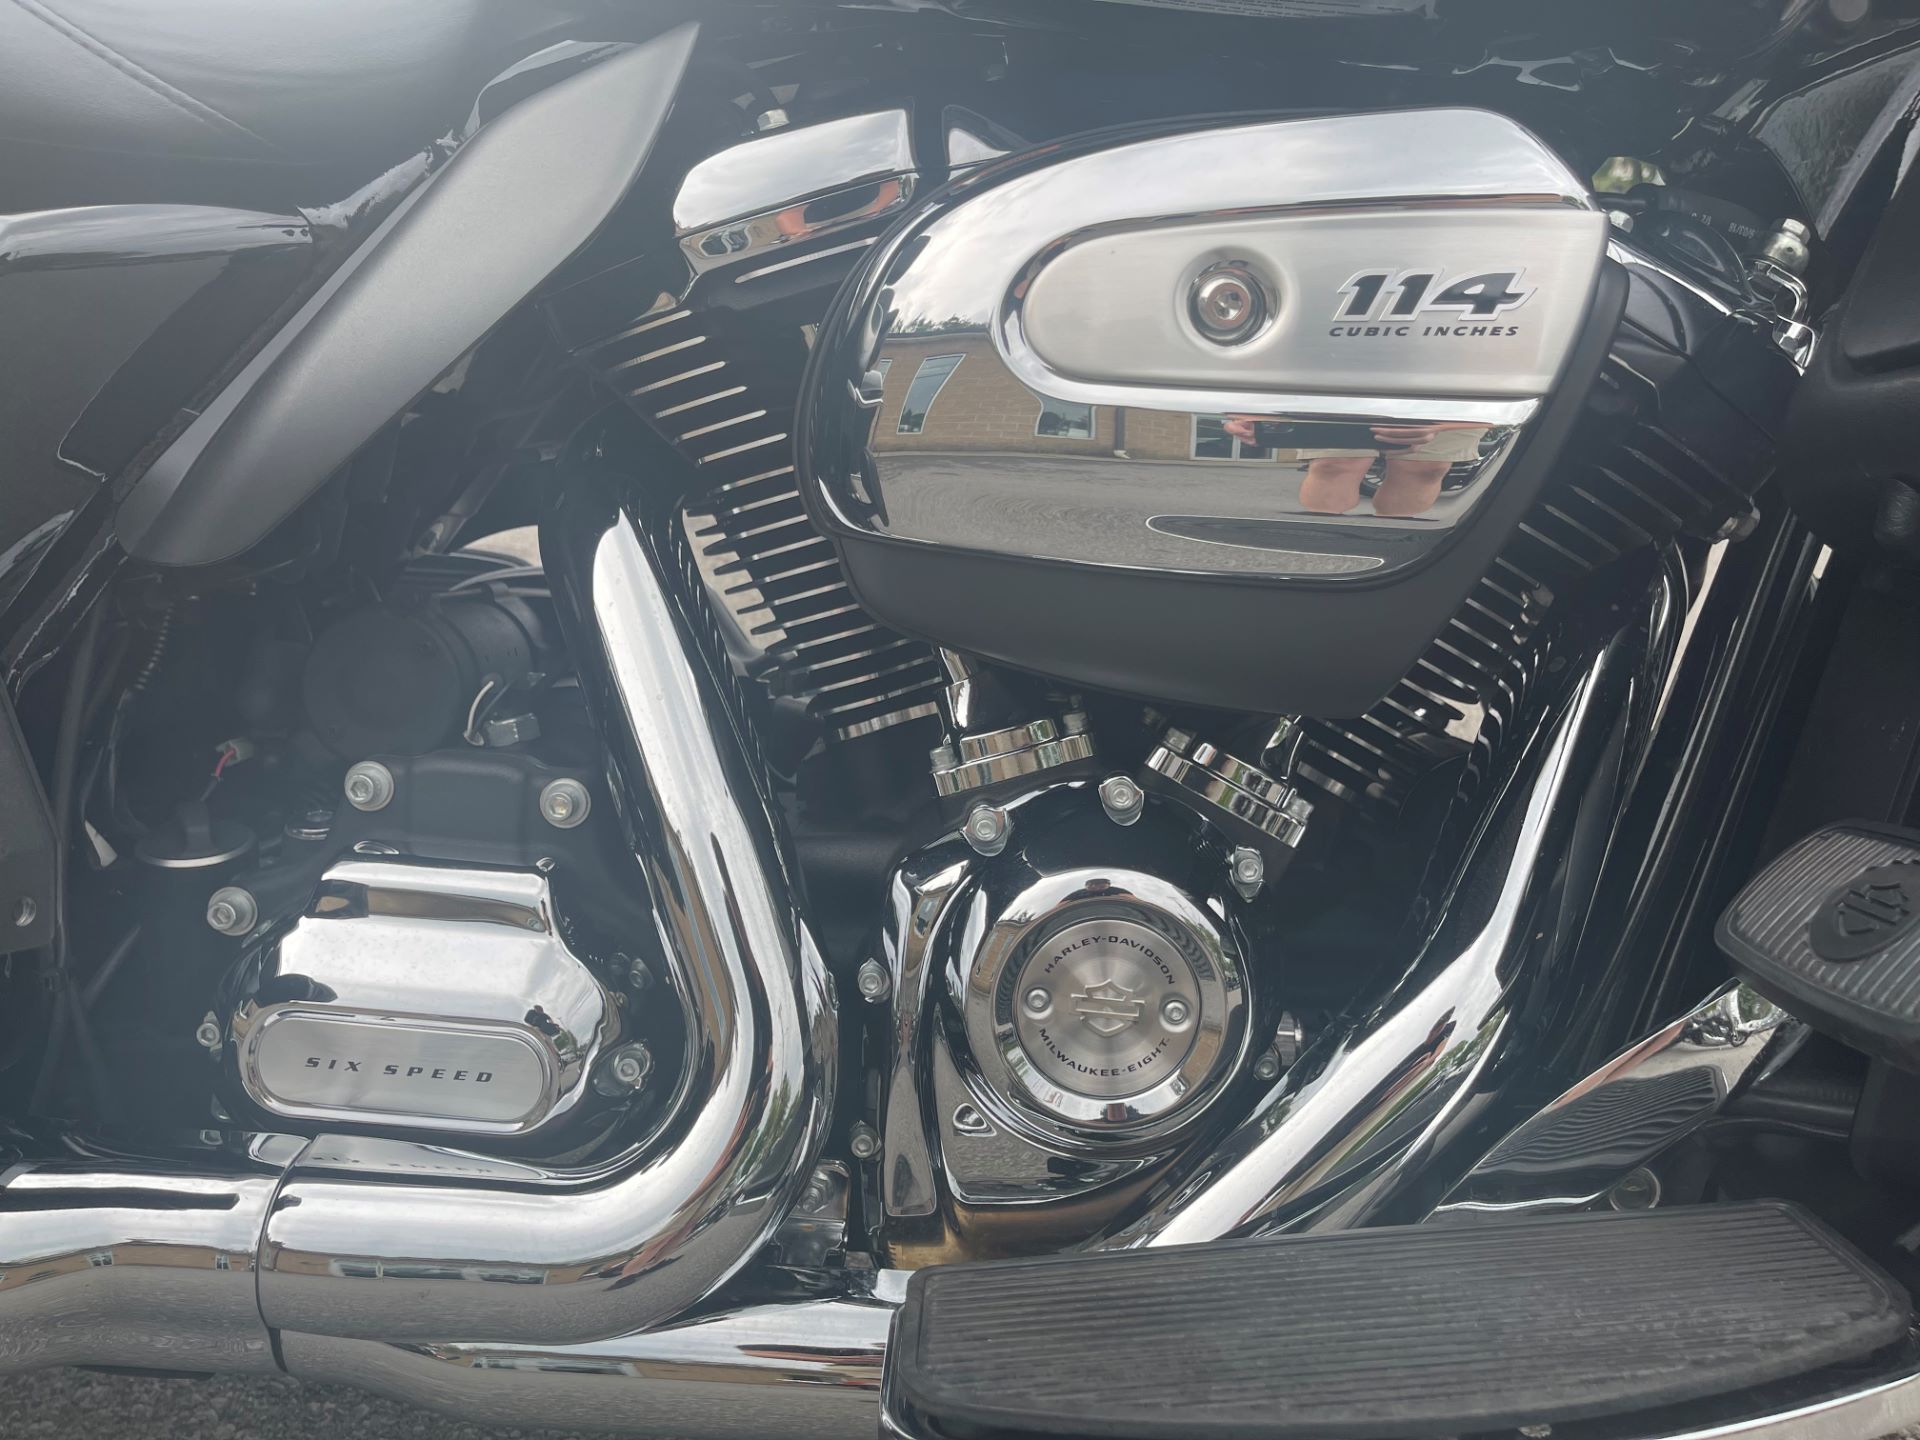 2020 Harley-Davidson Ultra Limited in Chicora, Pennsylvania - Photo 9